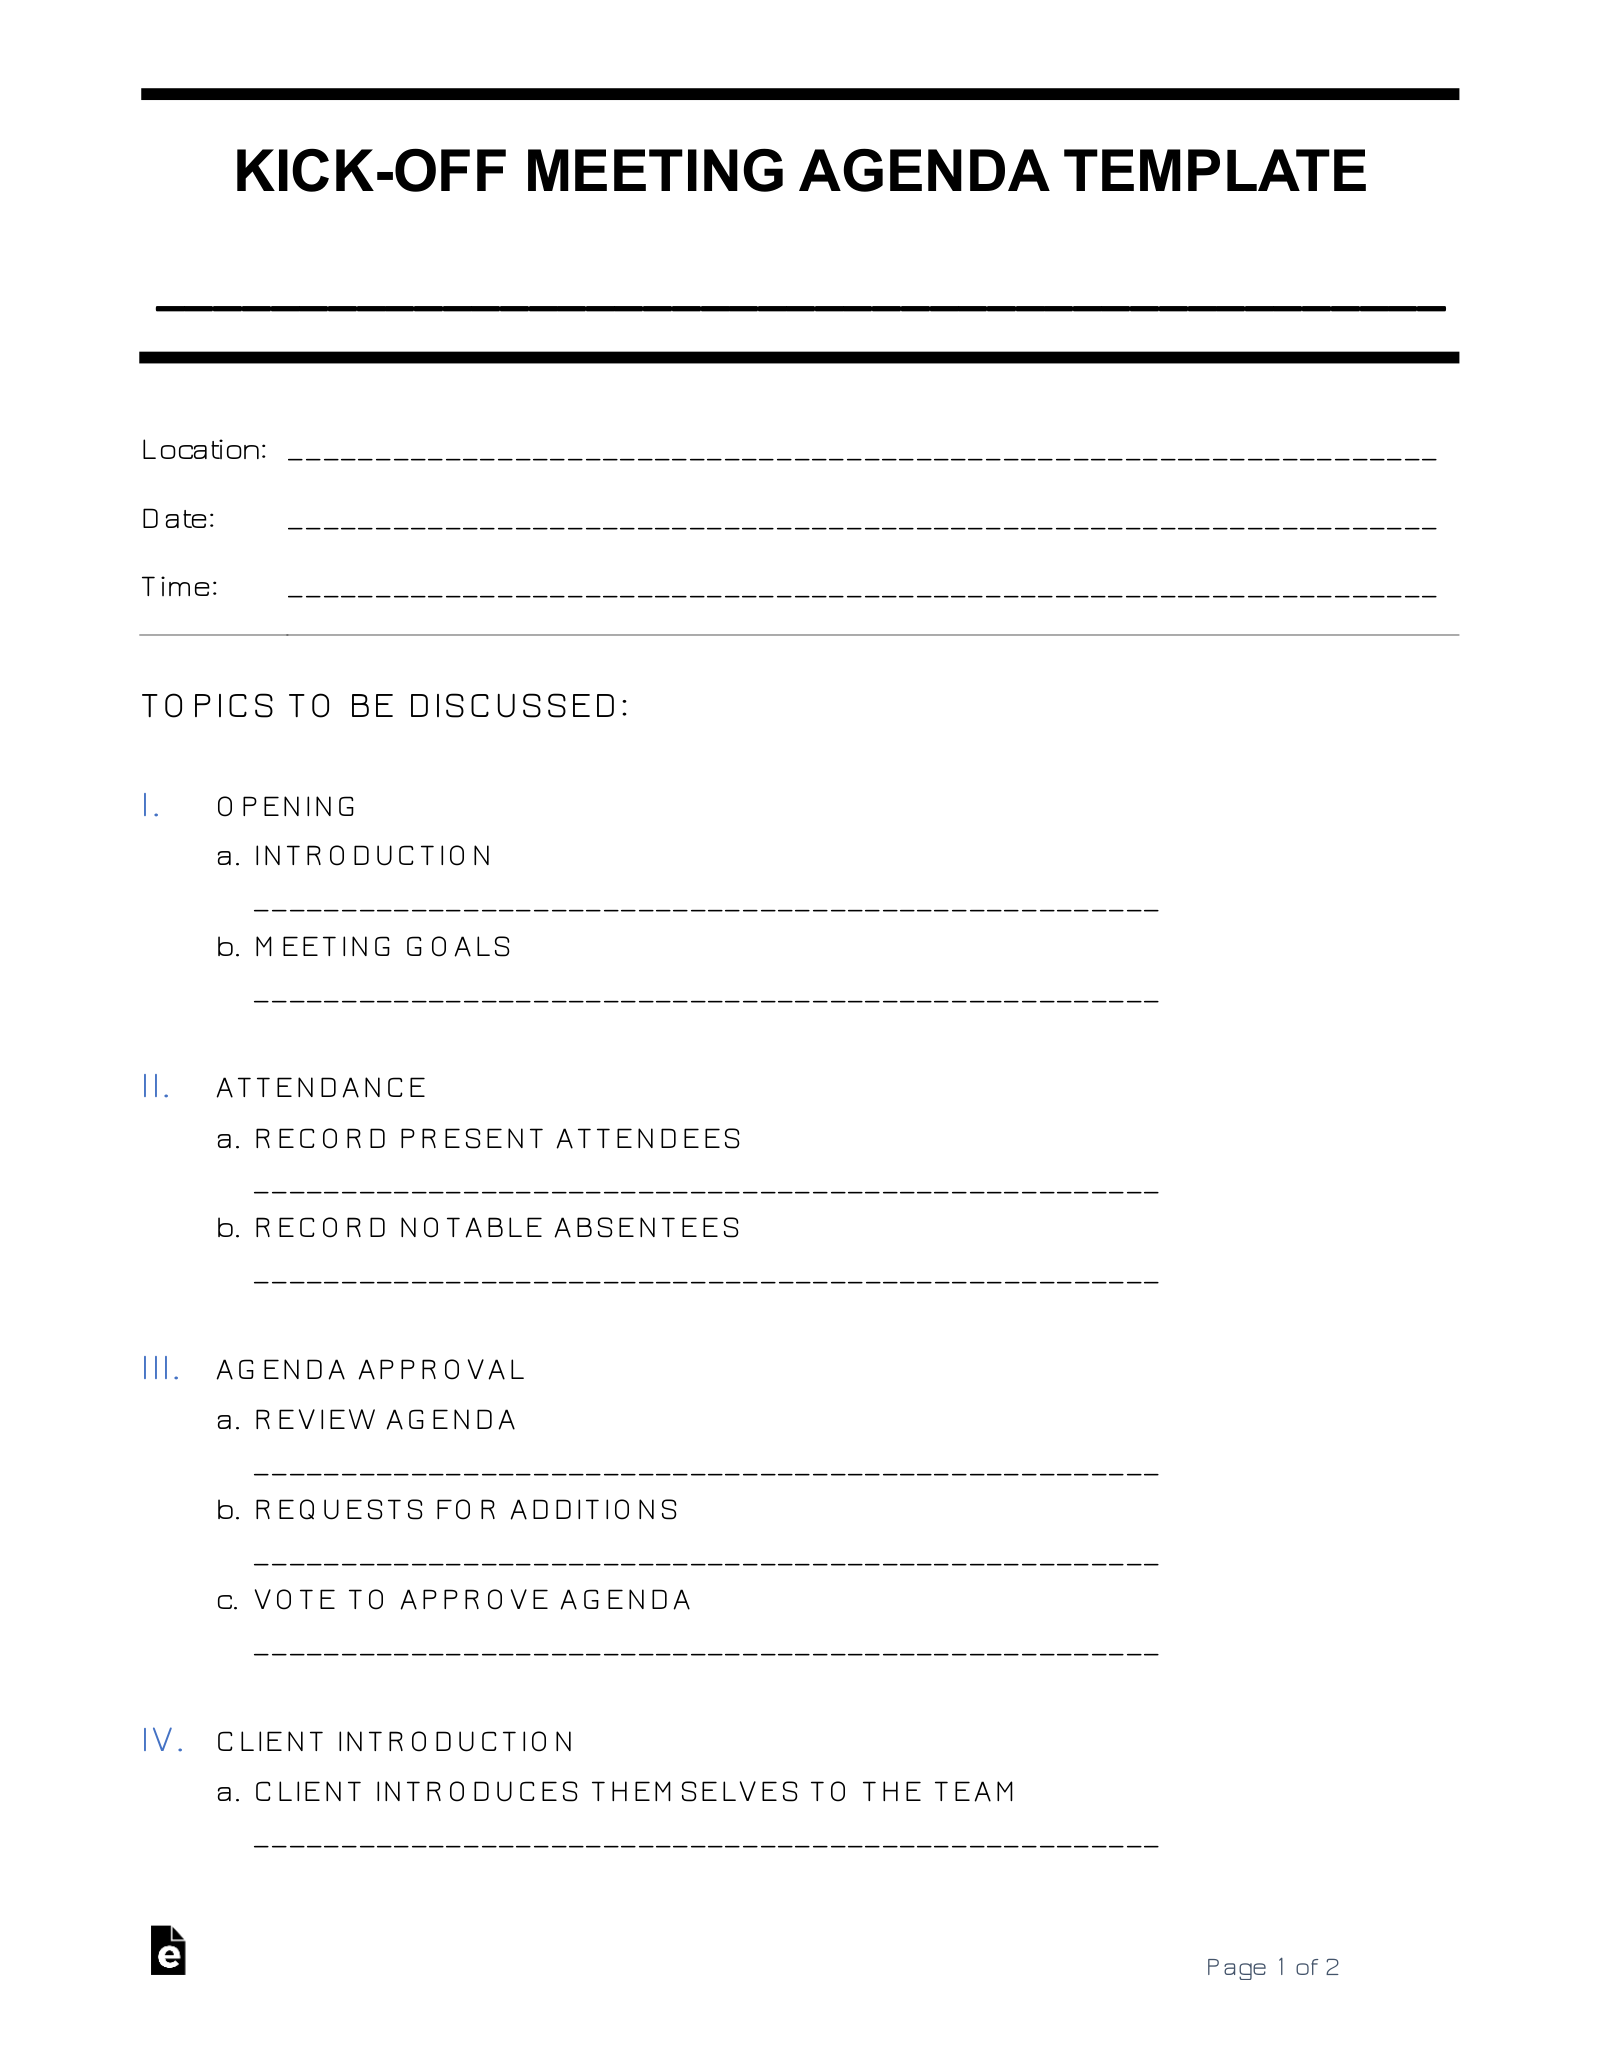 free-kick-off-meeting-agenda-template-sample-pdf-word-eforms